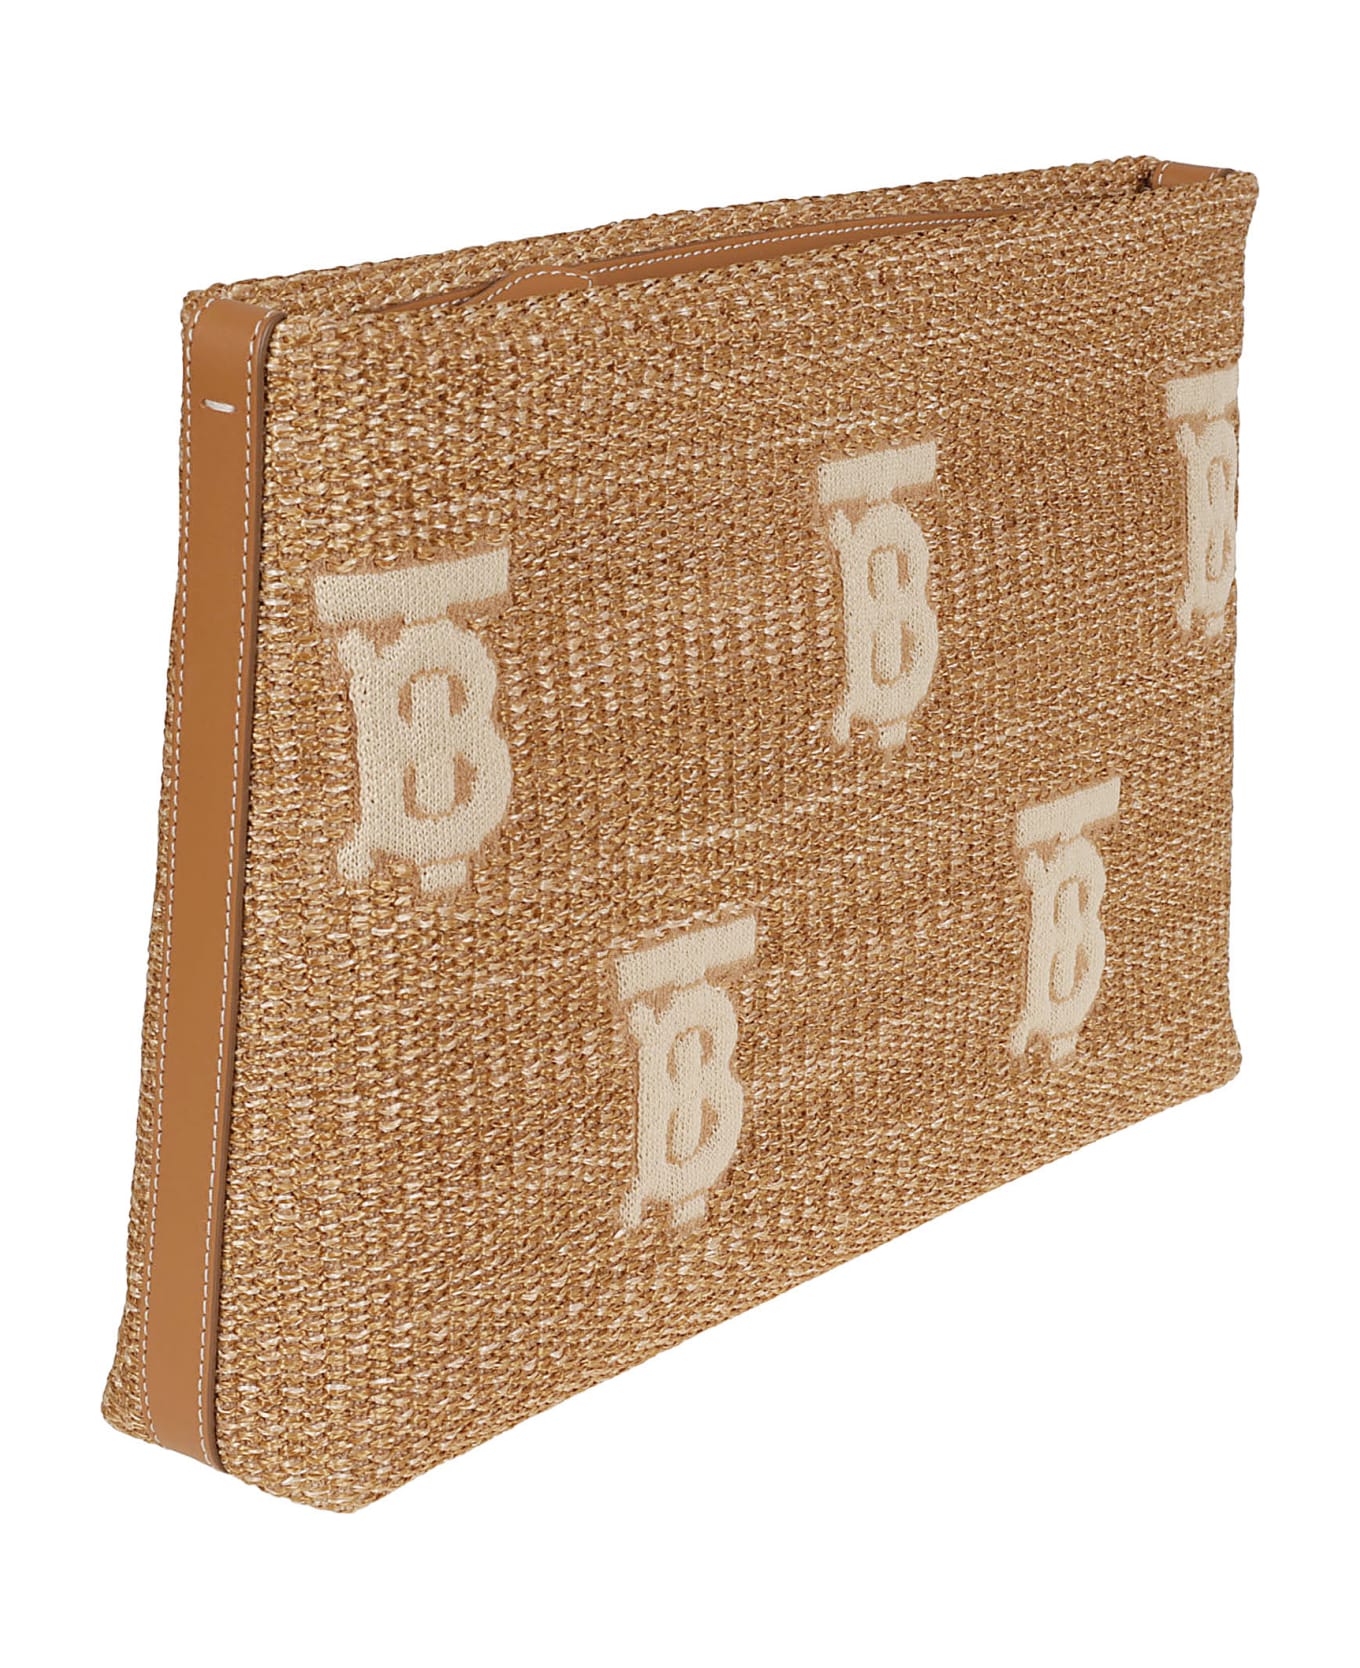 Burberry Logo Weaved Clutch - Natural/beige